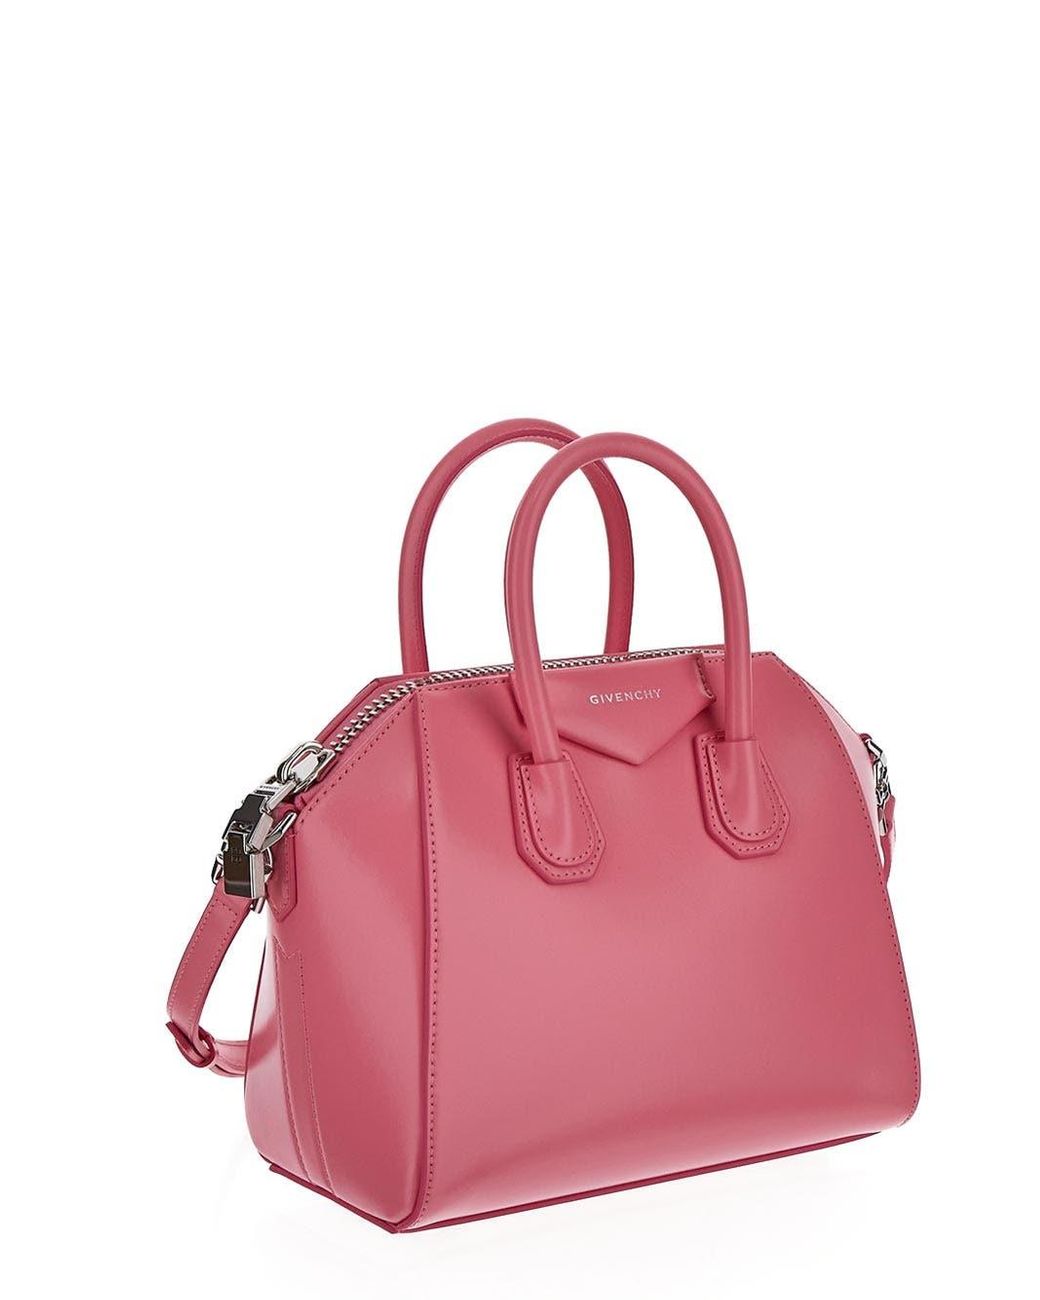 Givenchy Antigona Mini Bag in Pink | Lyst